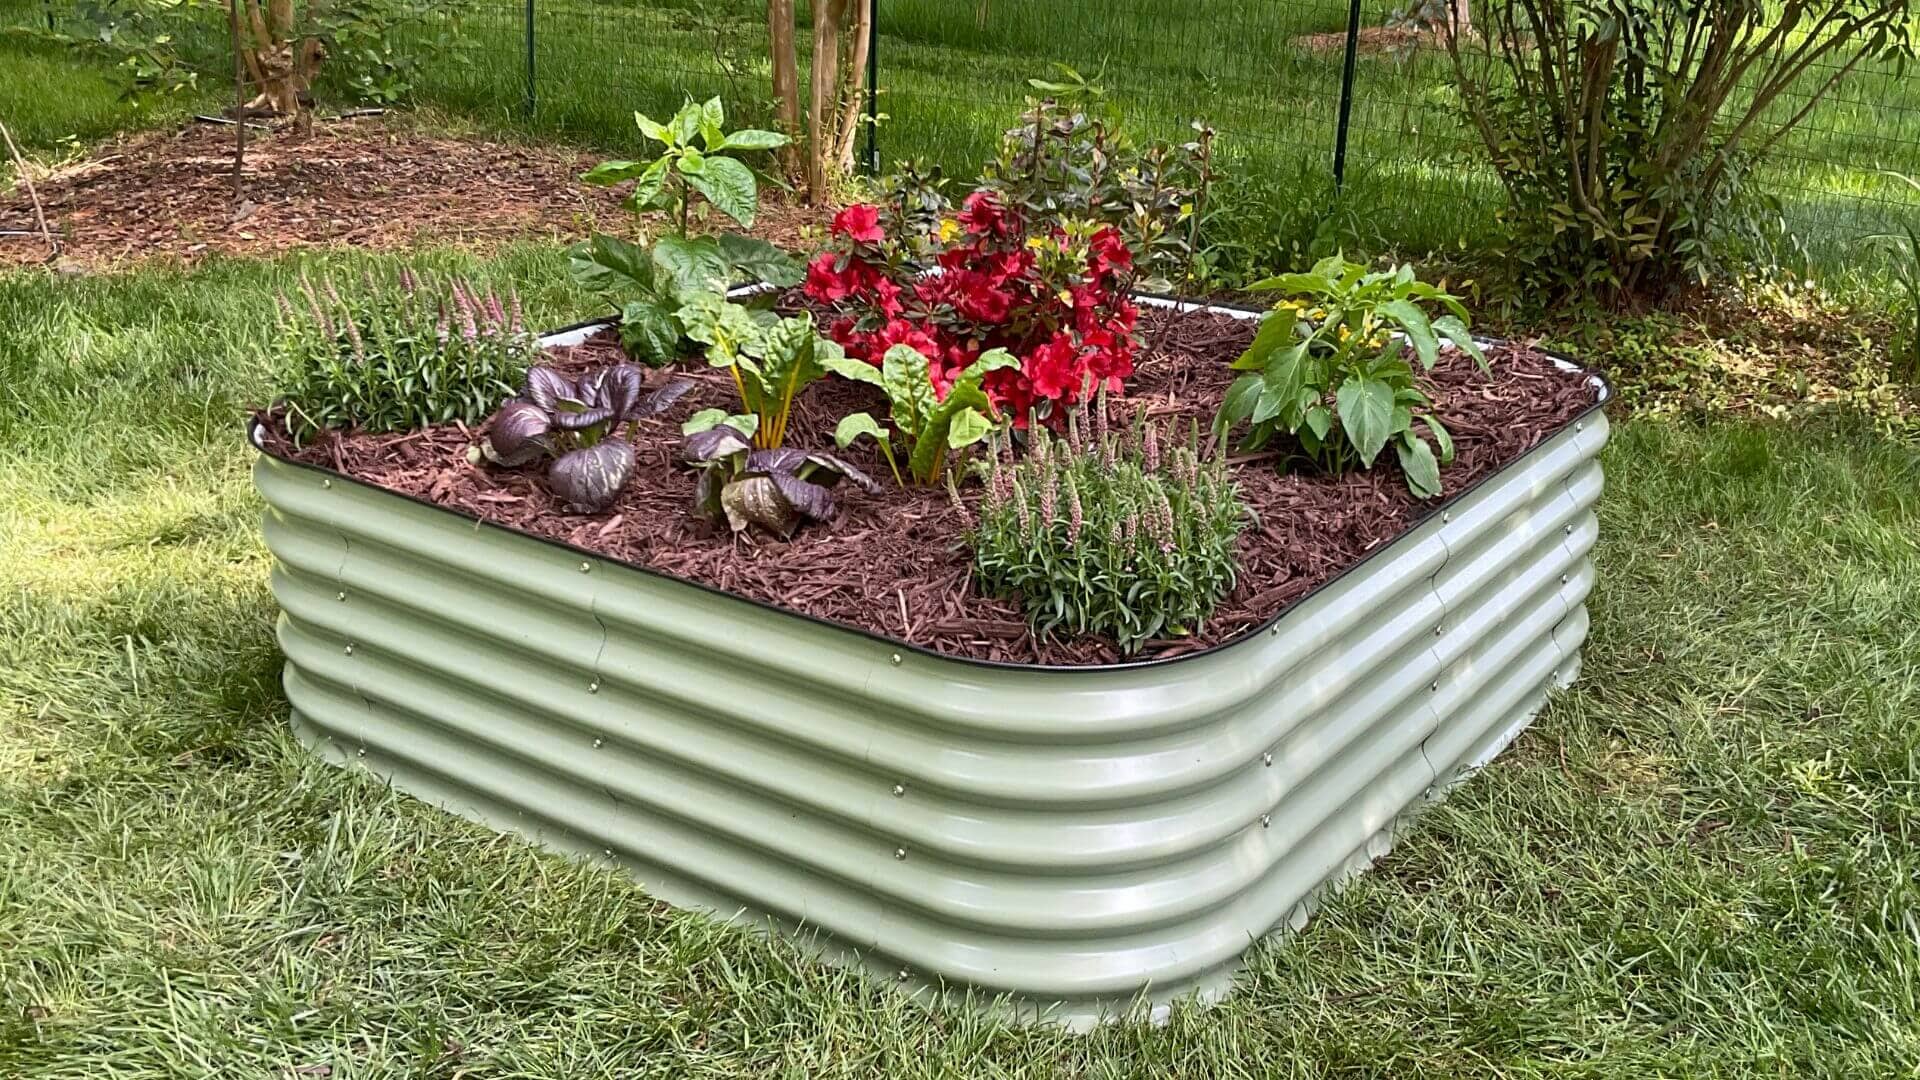 VegHerb's 9-in-1 Metal Raised Garden Bed (17